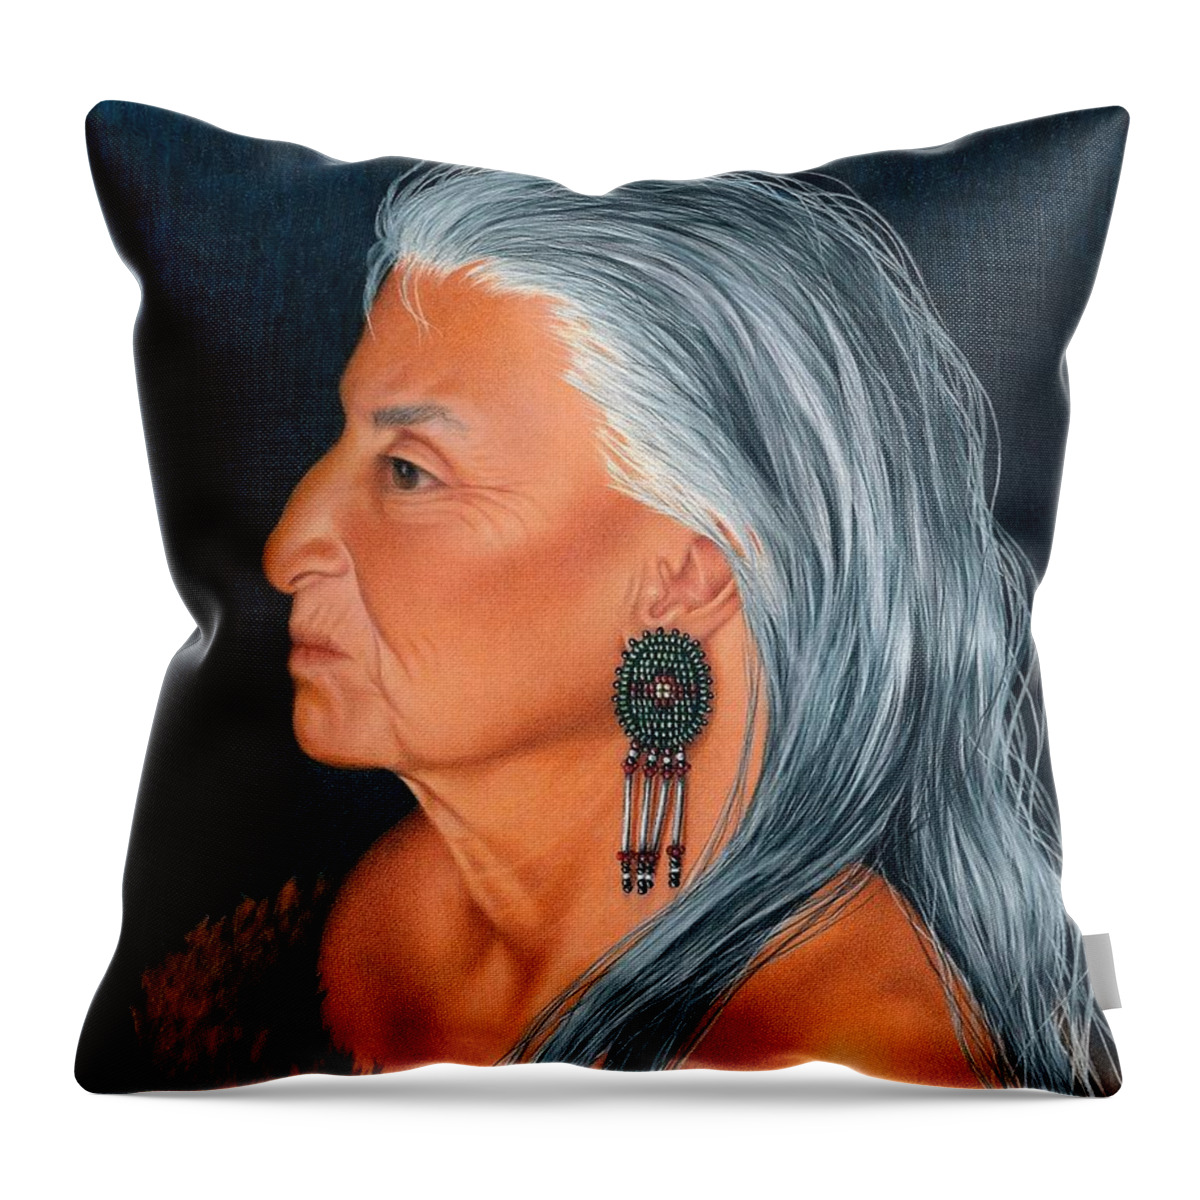 Native American Portrait. American Indian Elder Portrait. Throw Pillow featuring the painting Delaware Elder by Valerie Evans